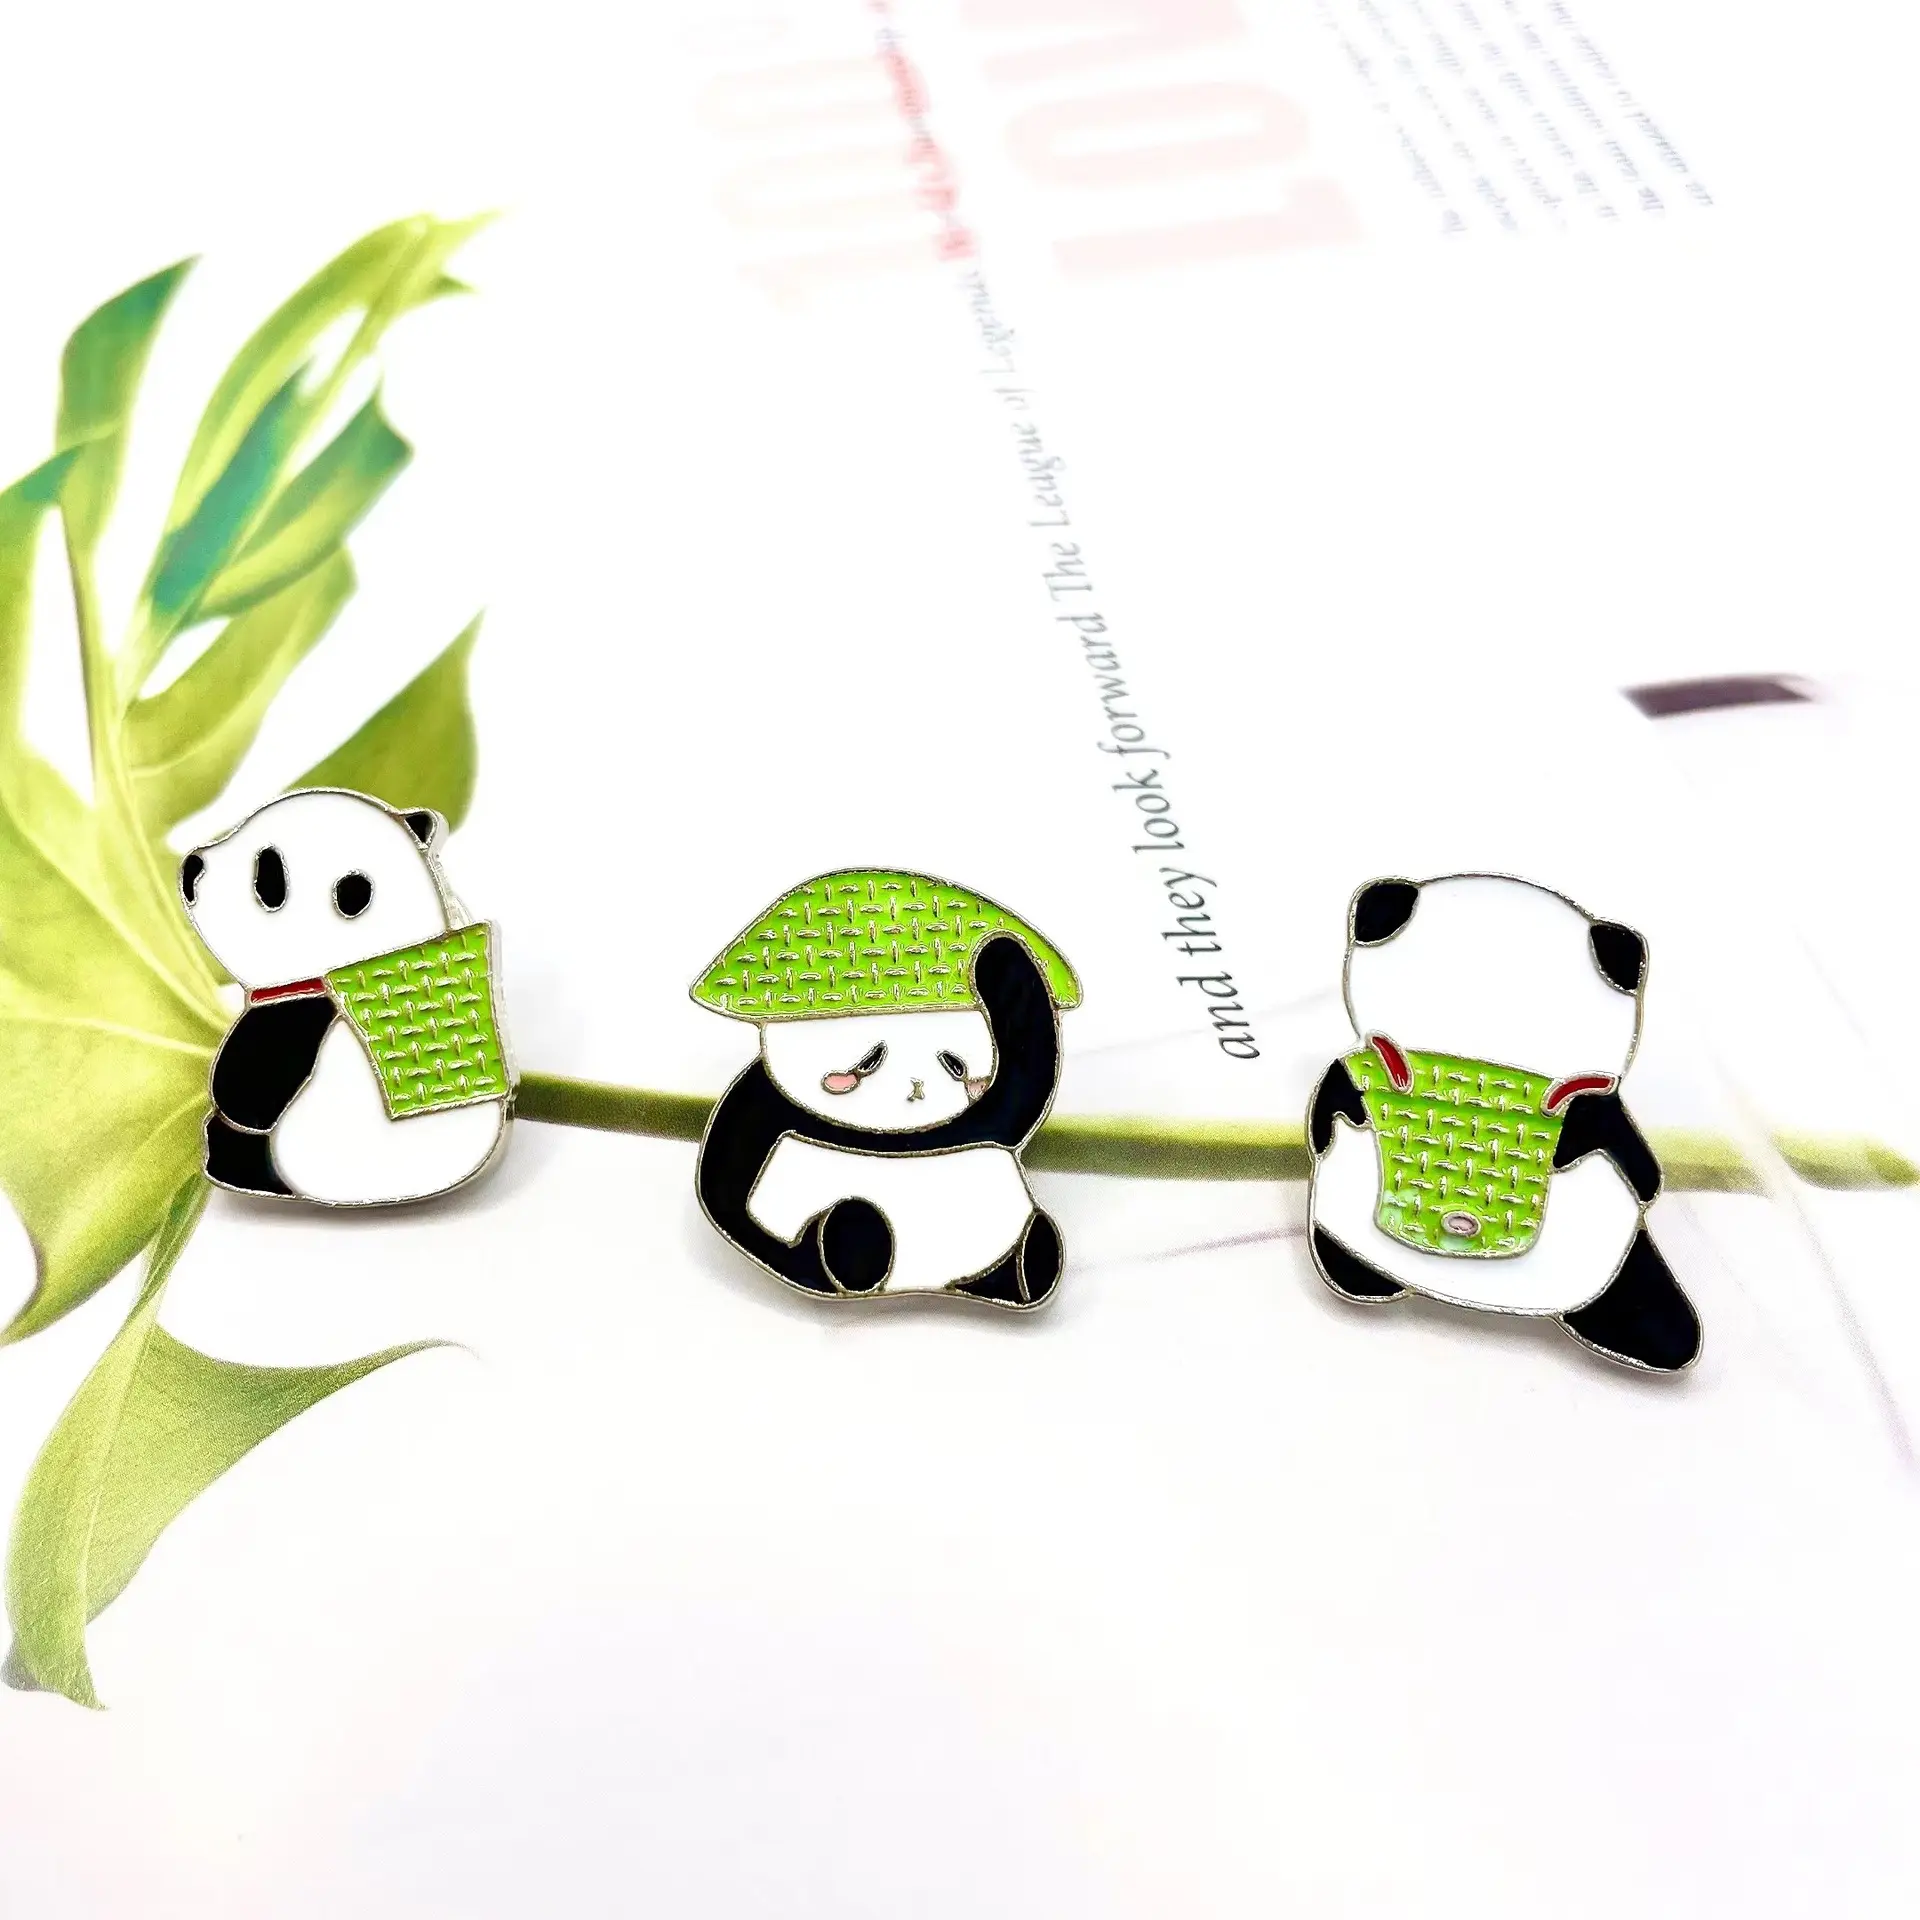 Chinese panda cute cartoon red panda badge soft cute styling badge student clothes bag accessory brooch